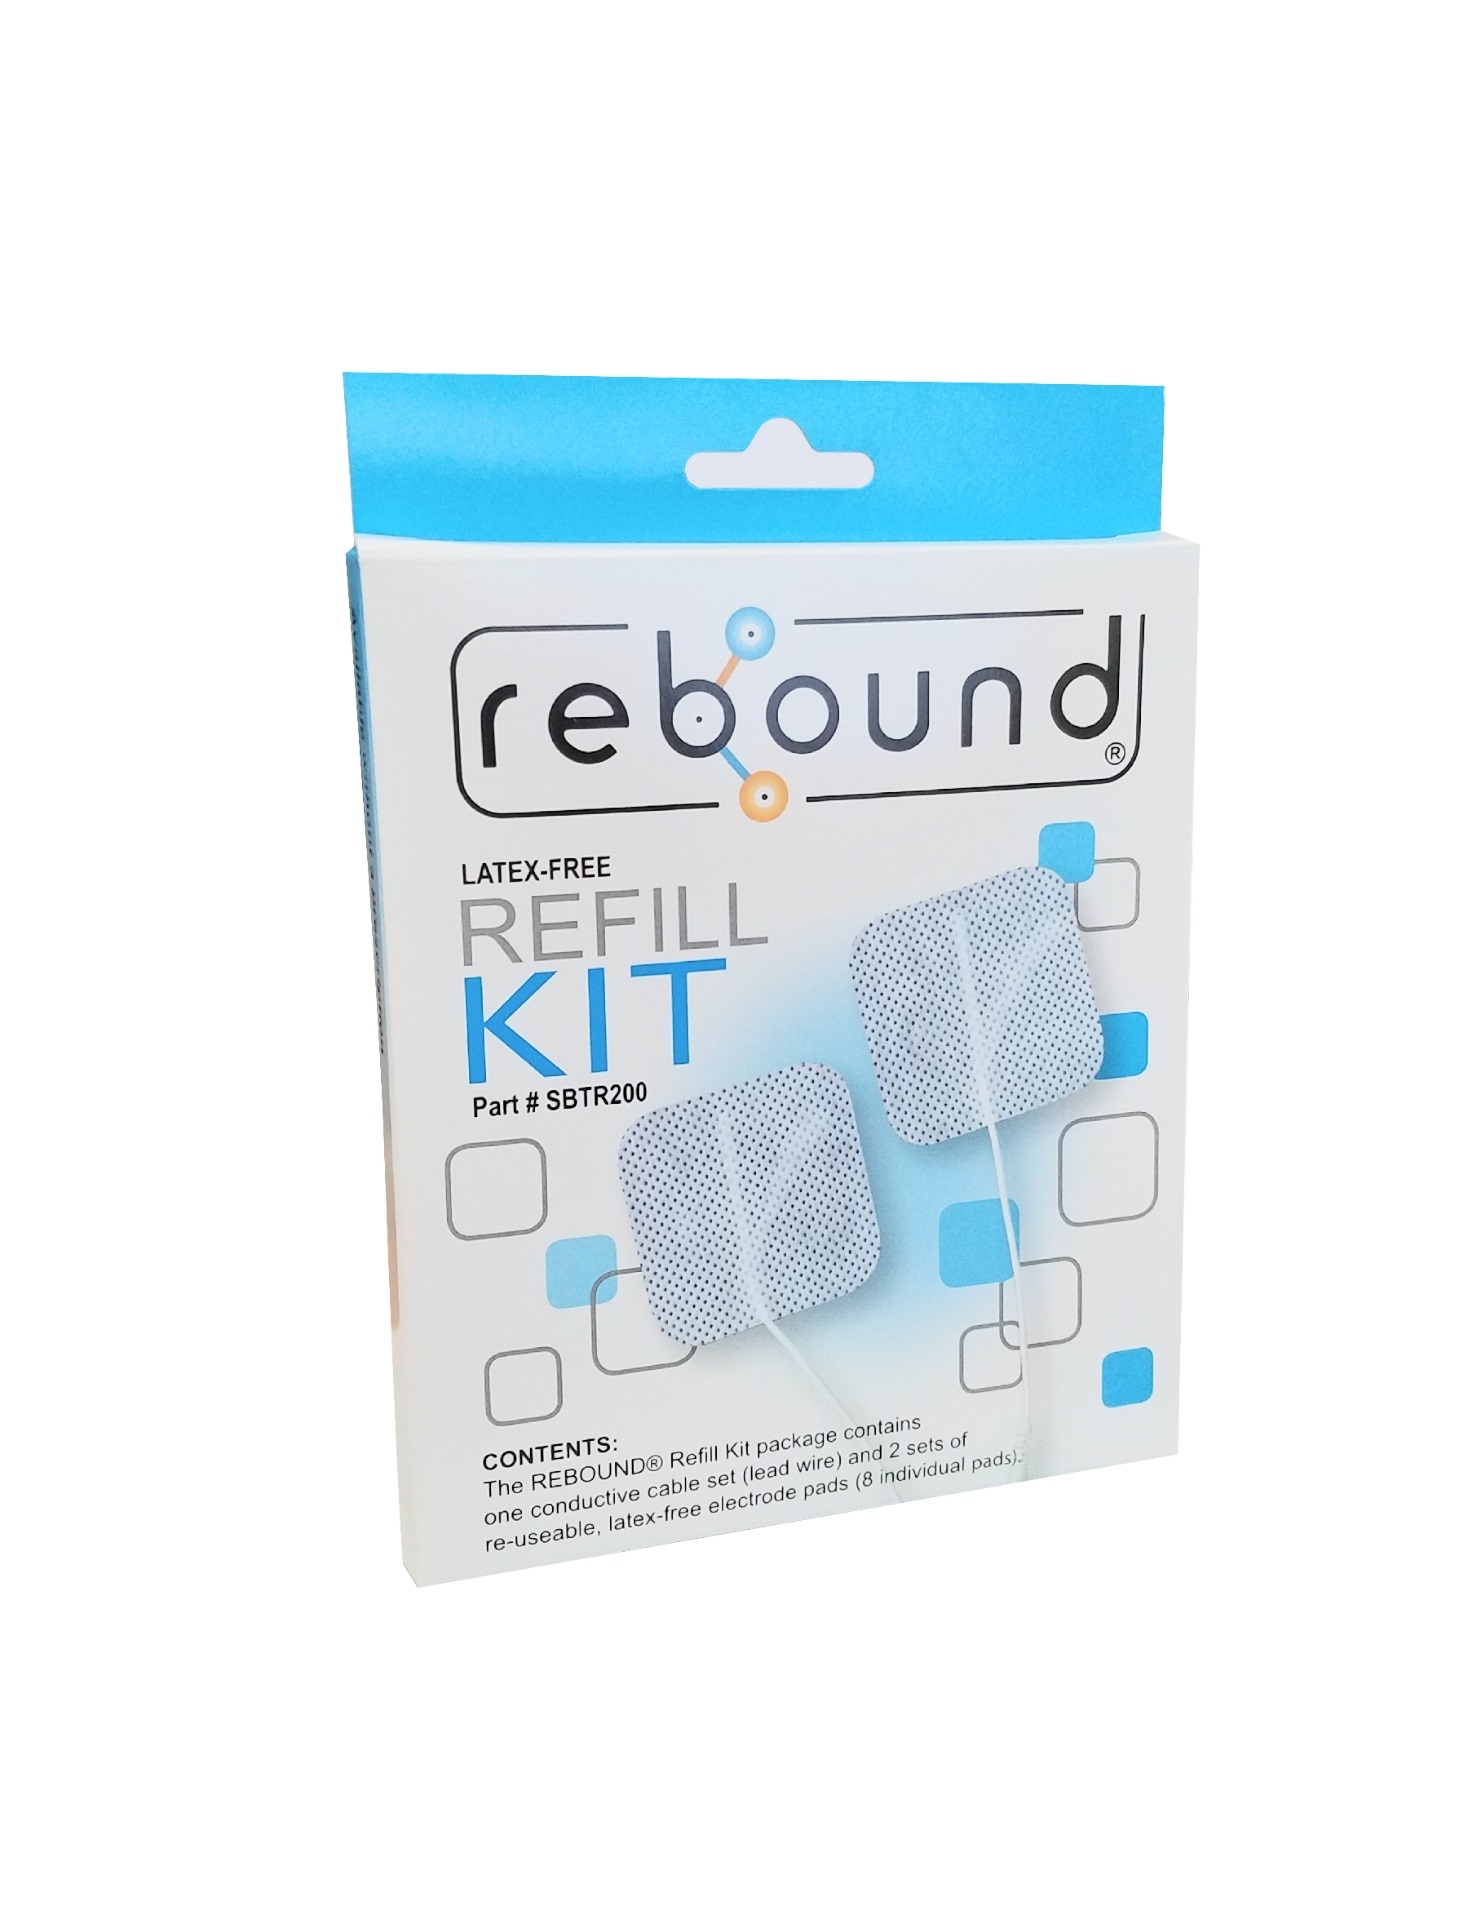 https://www.bmls.com/wp-content/uploads/2016/07/Rebound-Refill-Kit-1.jpg